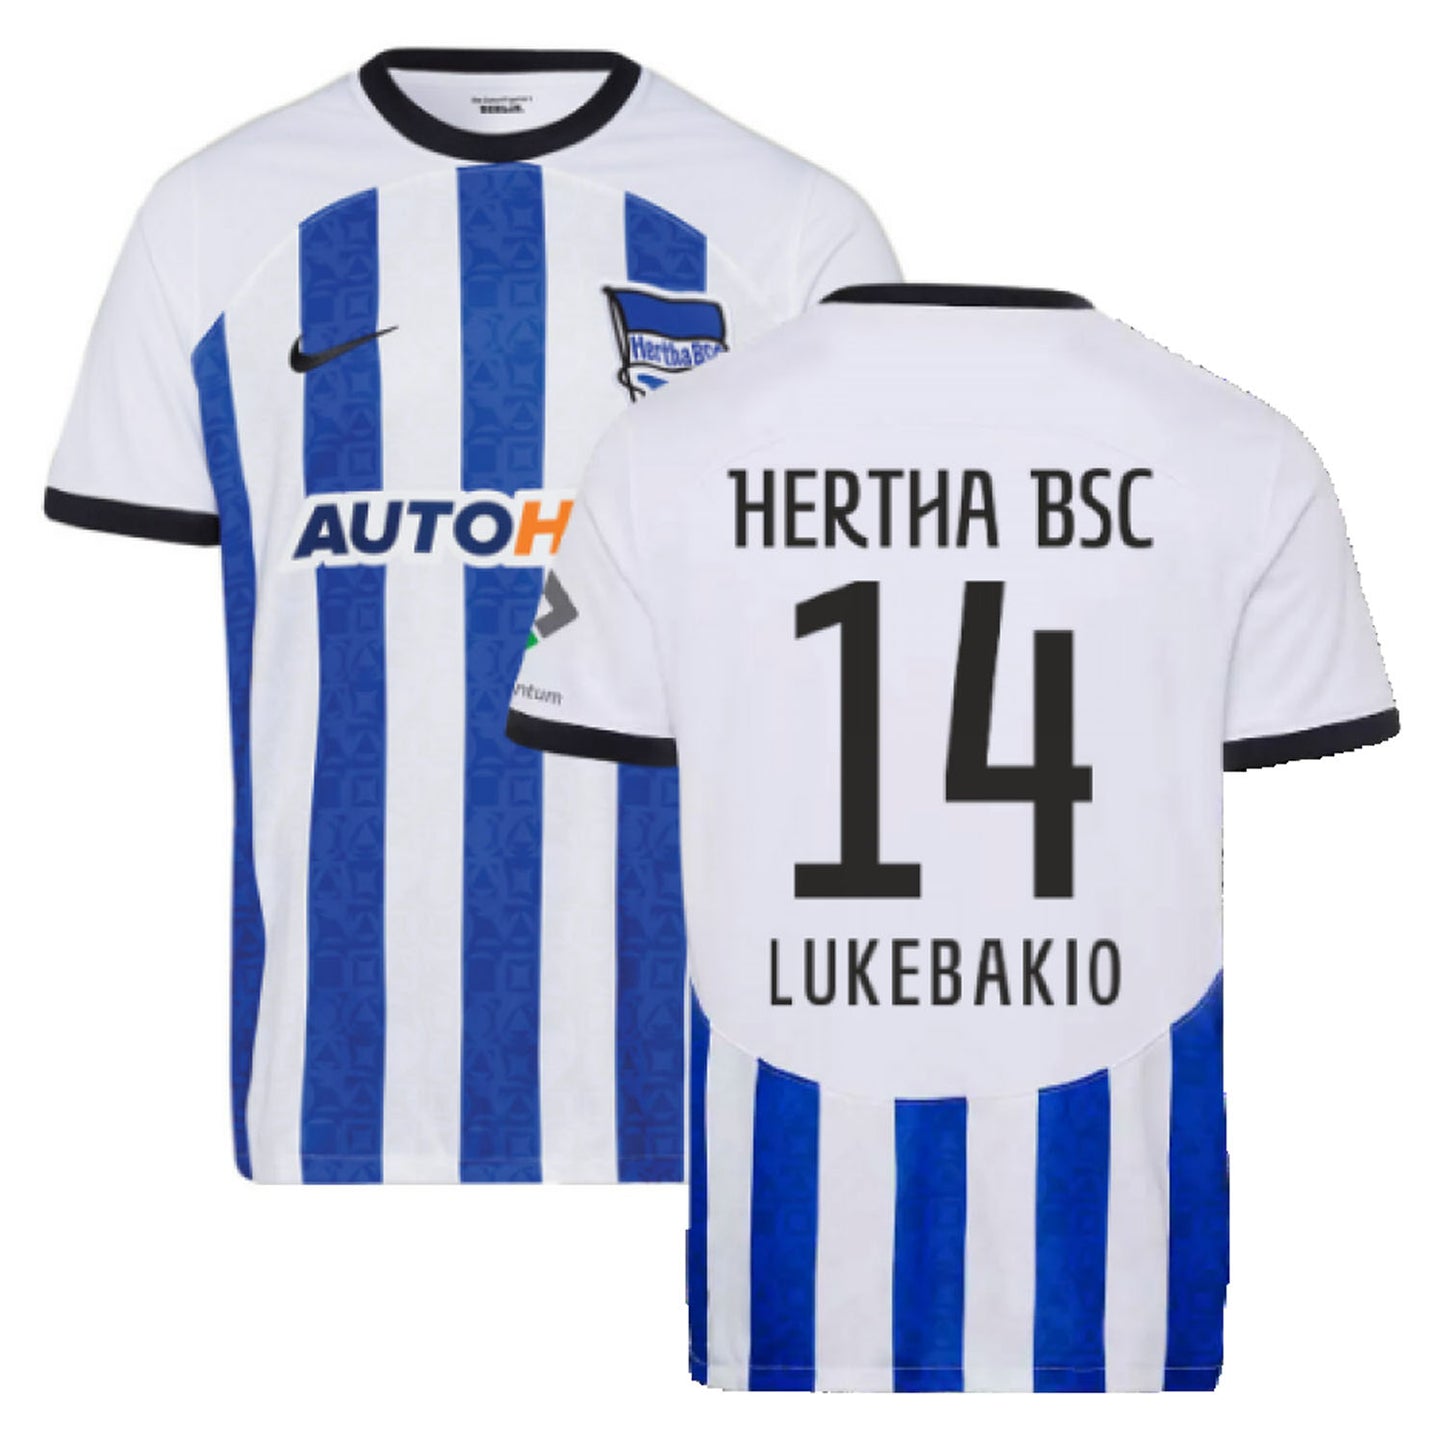 Dodi Lukebakio Hertha BSC 14 Jersey